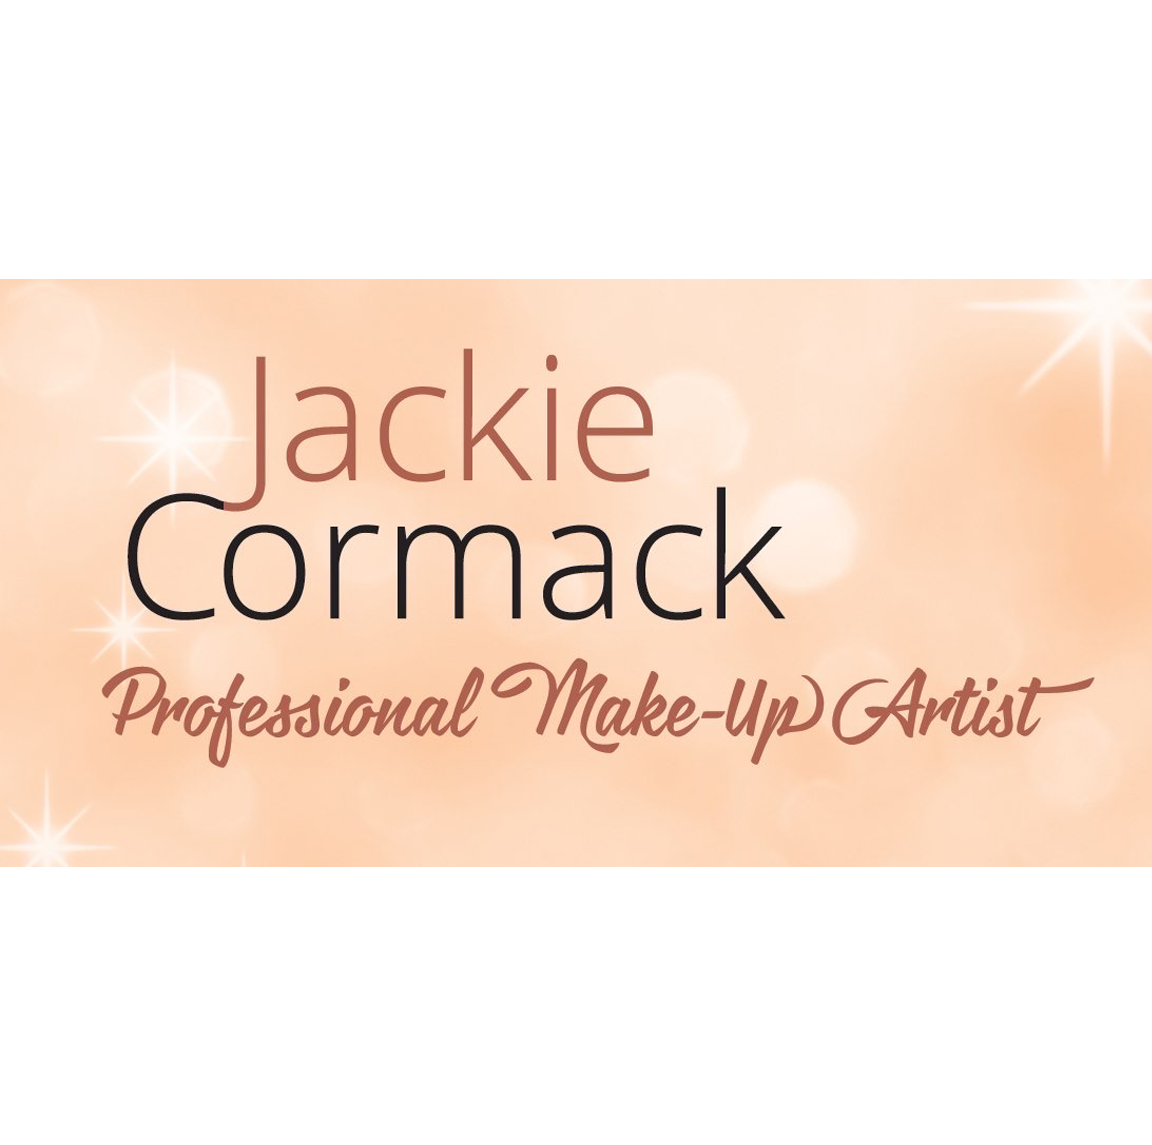 Jackie Cormack